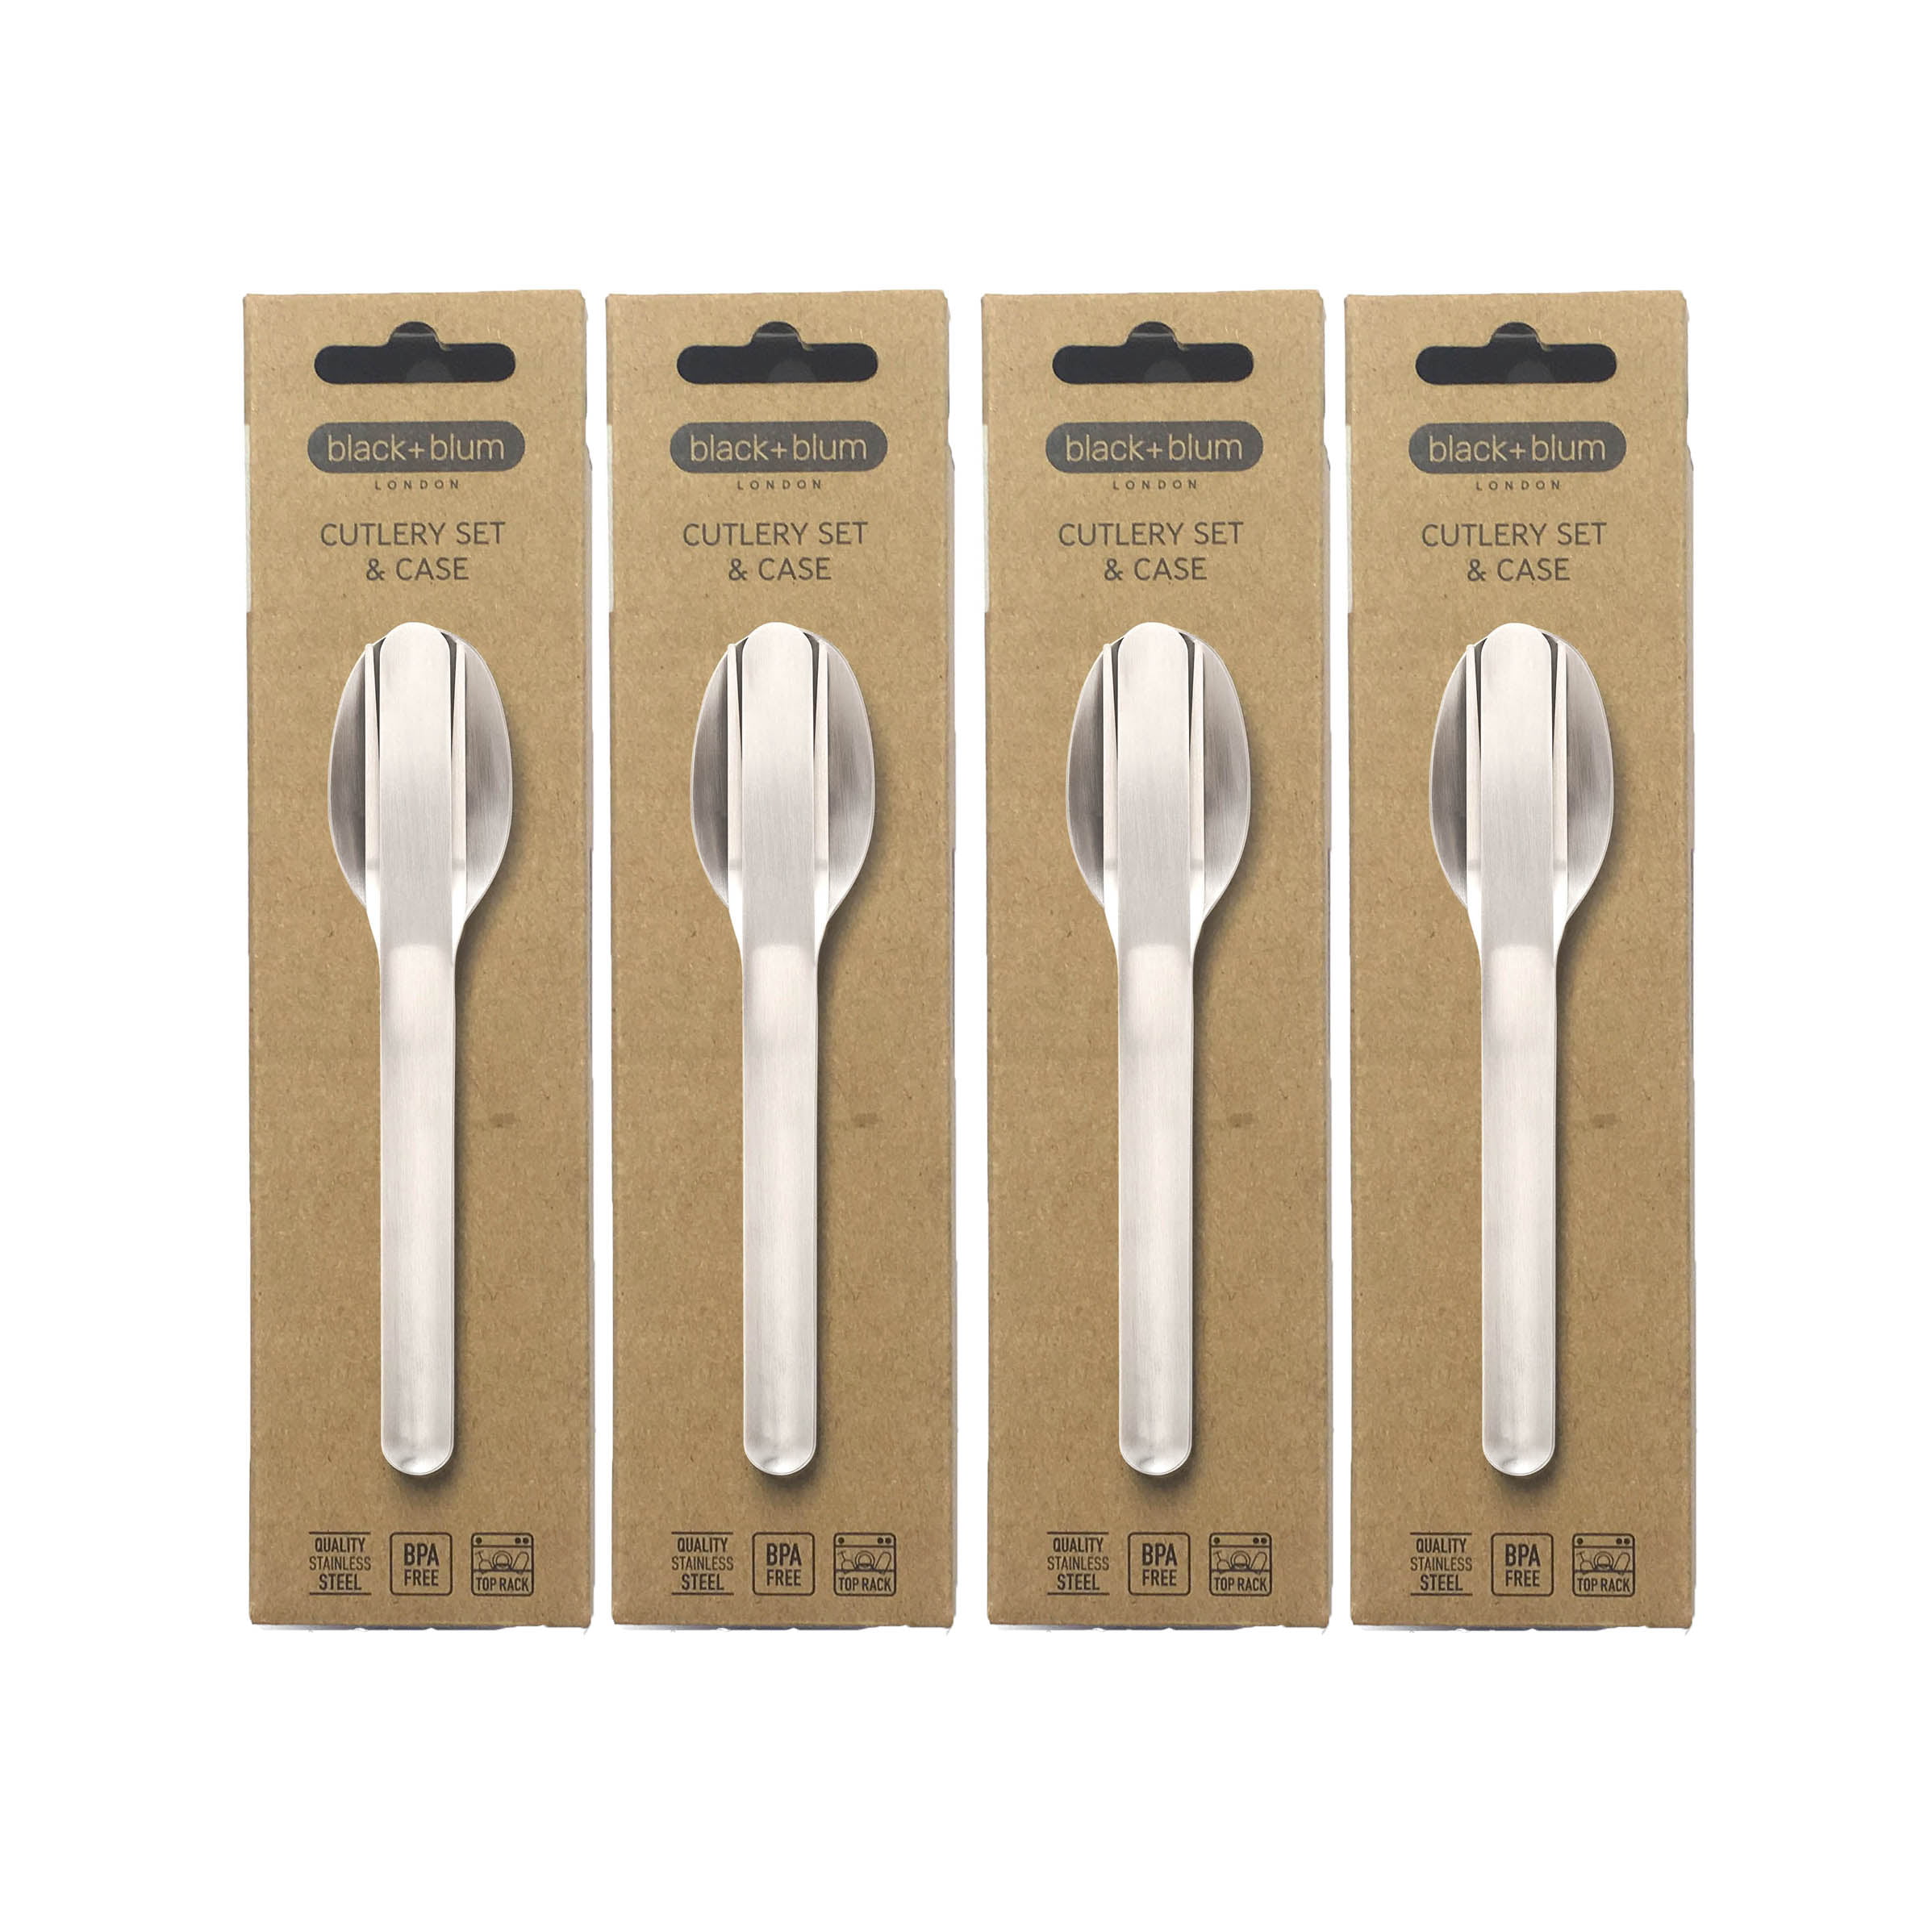 https://www.greenerlyfe.com/wp-content/uploads/2022/03/stainless-steel-travel-cutlery-set-4-pack.jpg